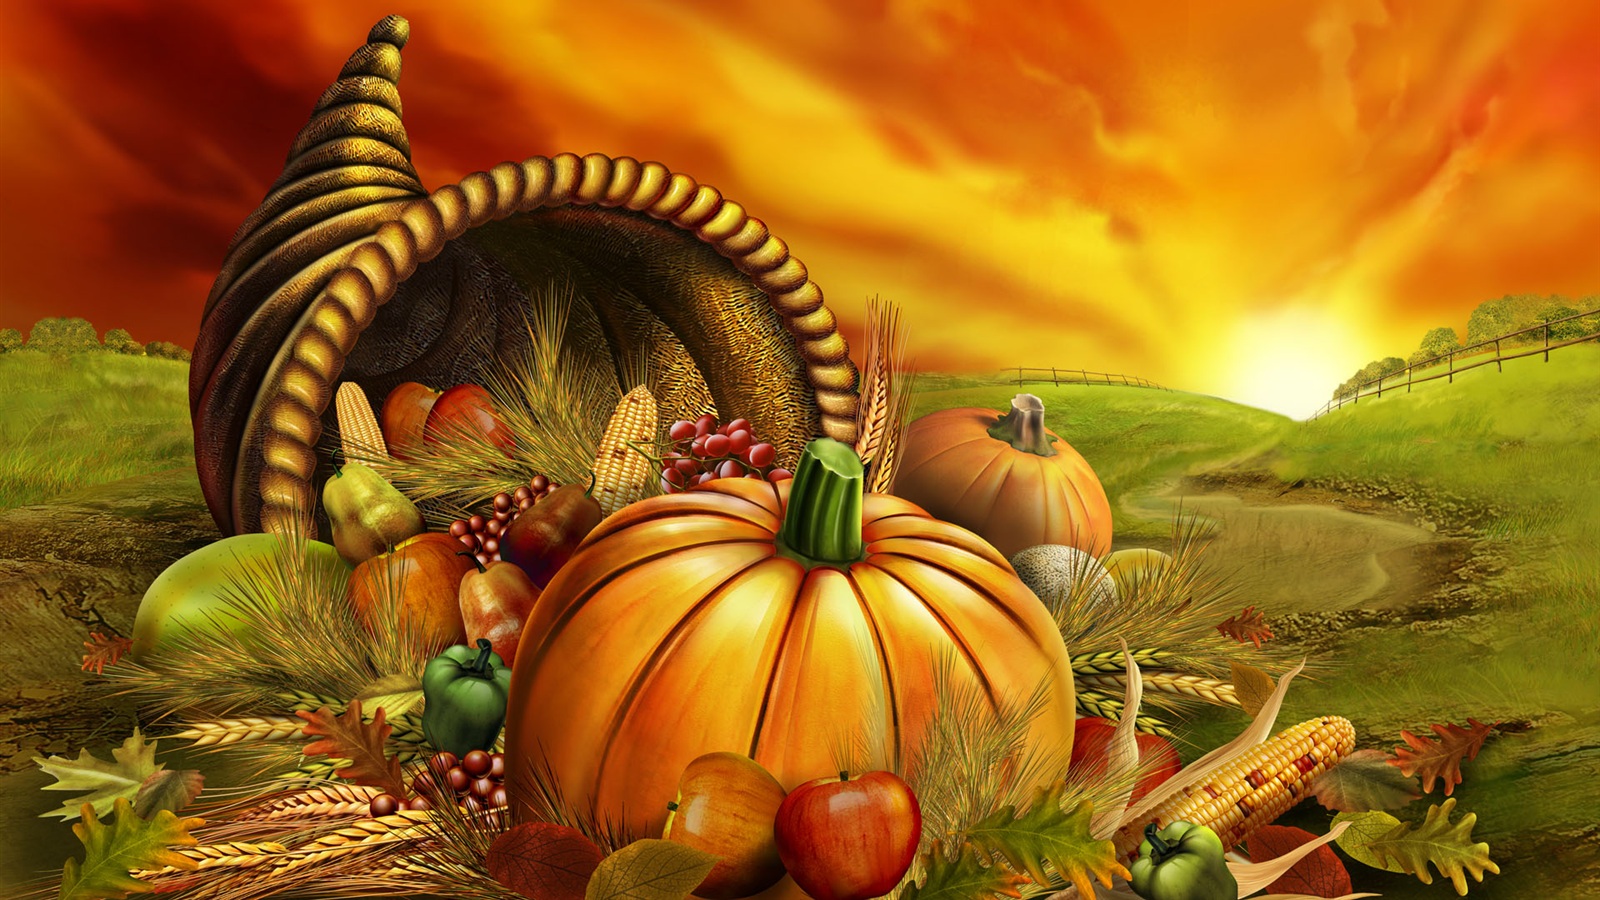 Thanksgiving food Wallpaper 1600x900 resolution wallpaper download